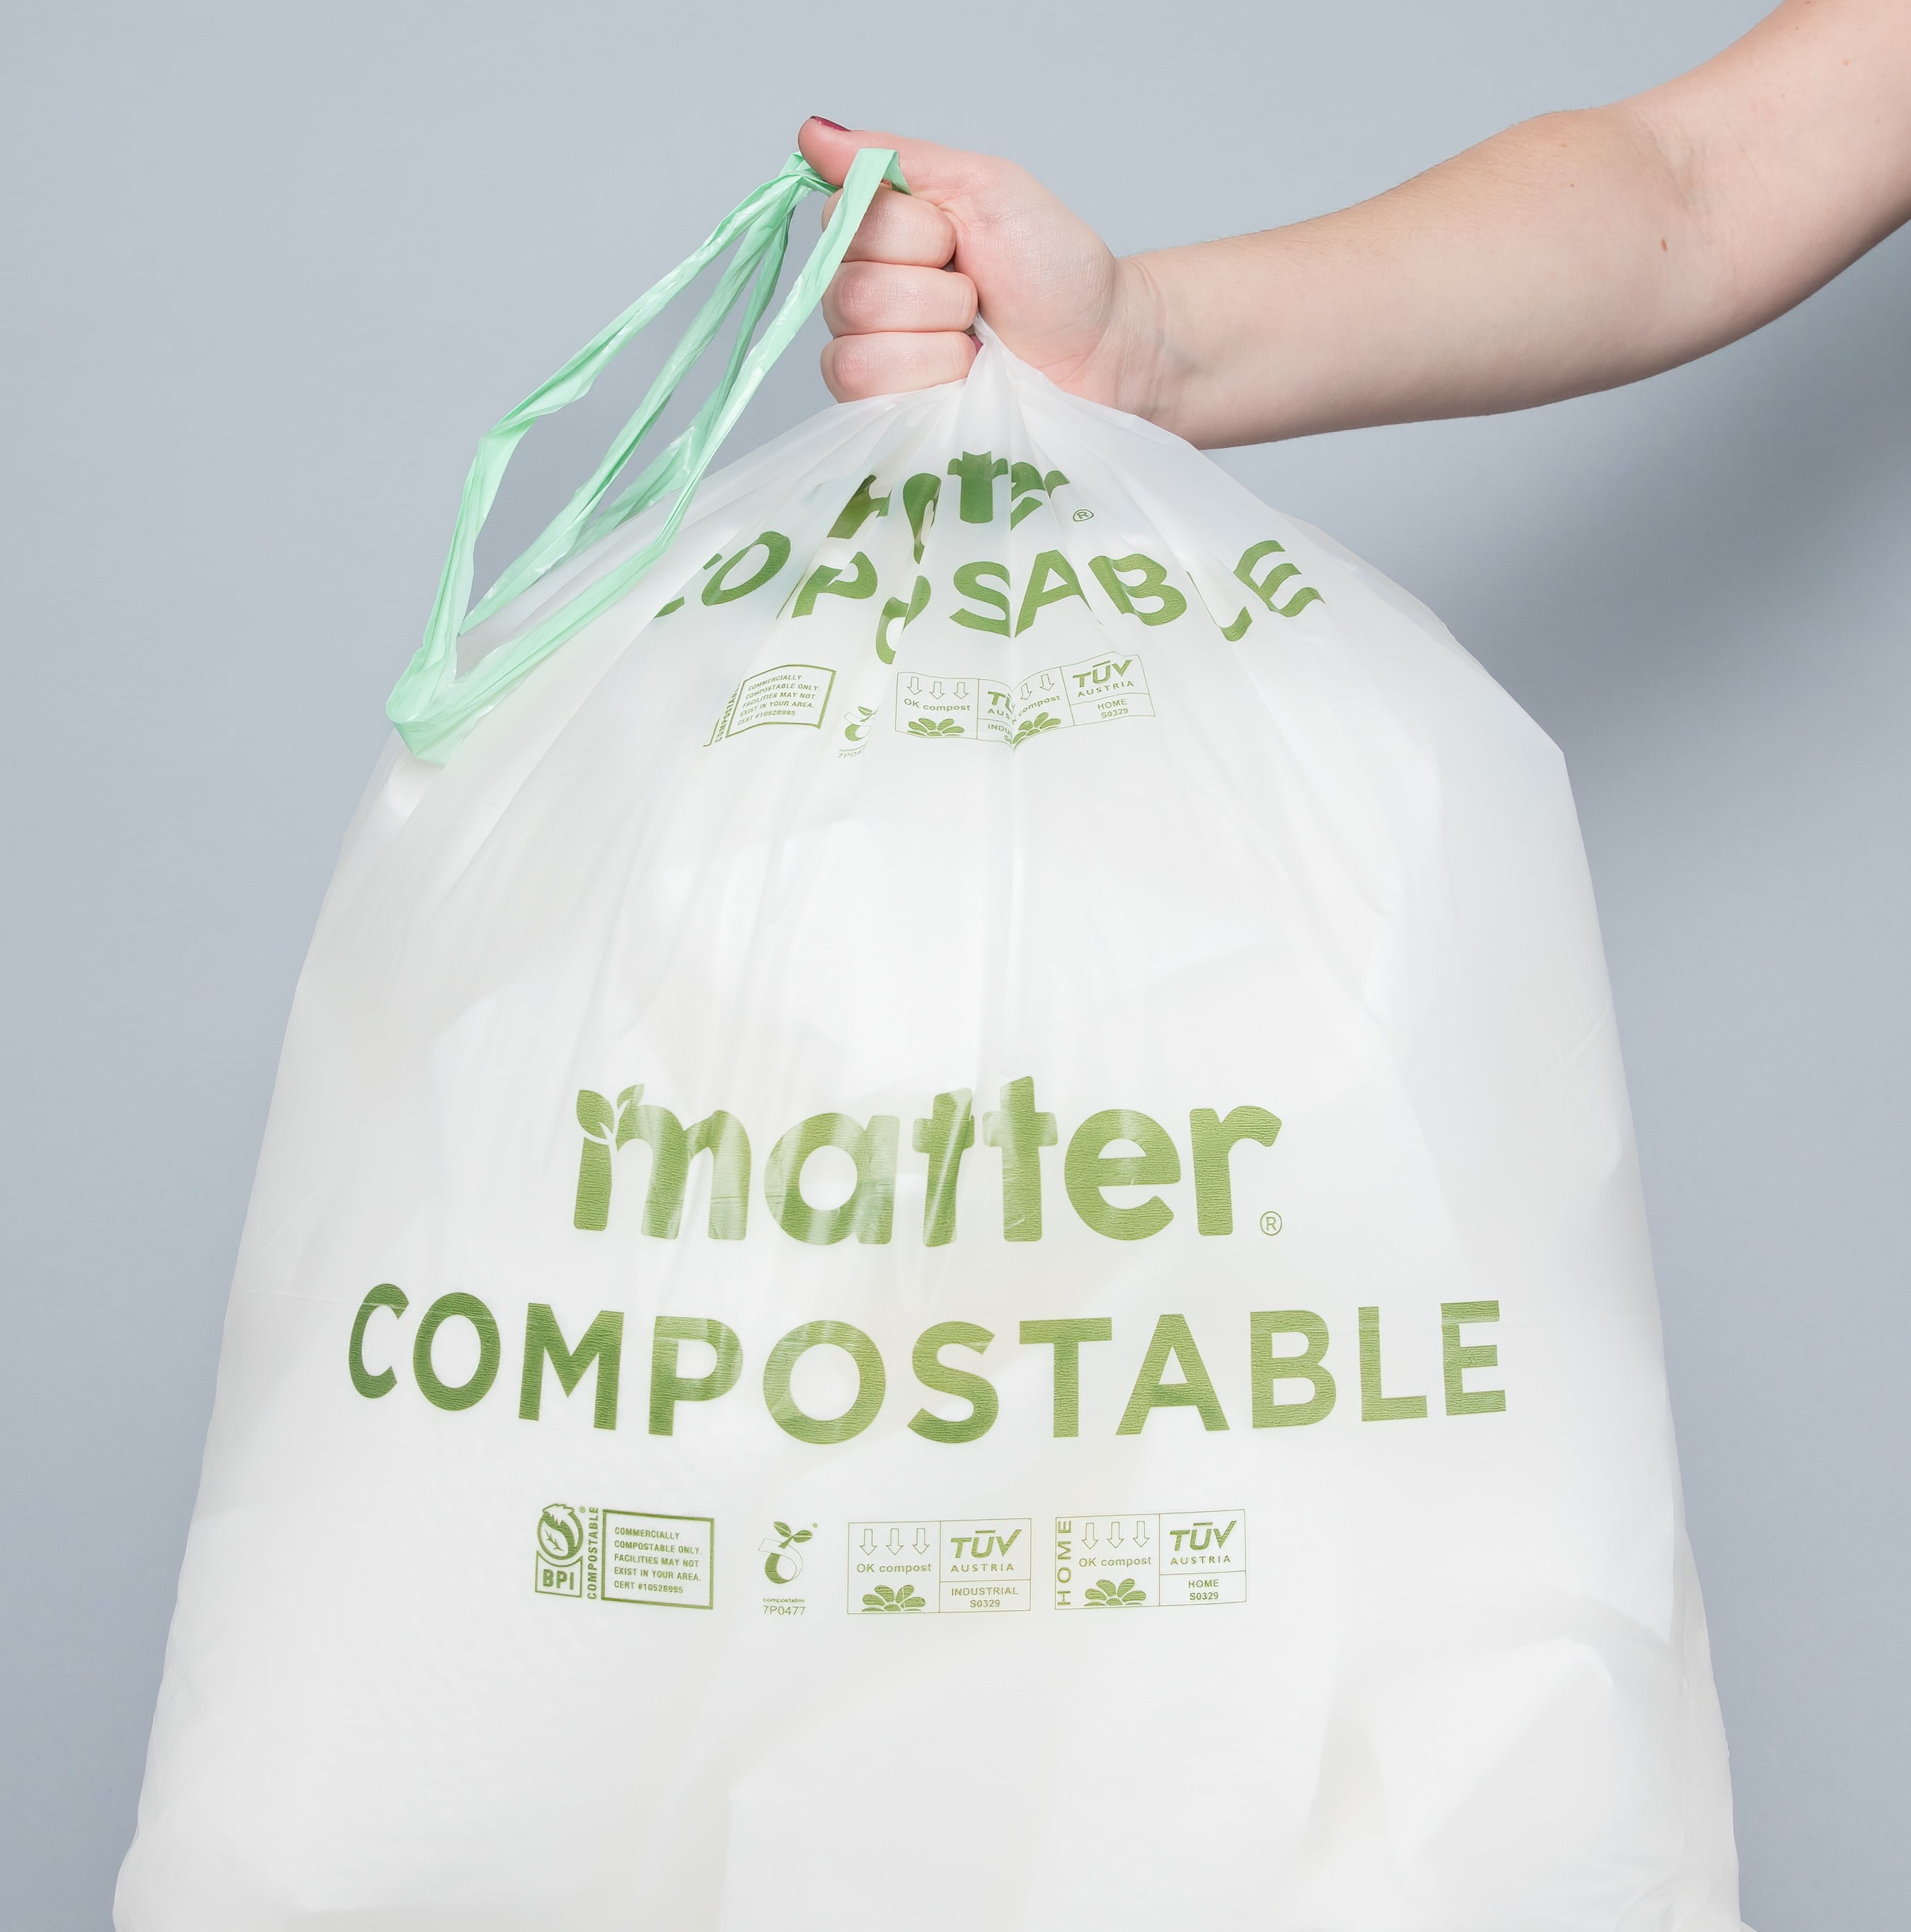 BB17/Simply Clean 3-Gallon Compostable Trash Bag – Lomi